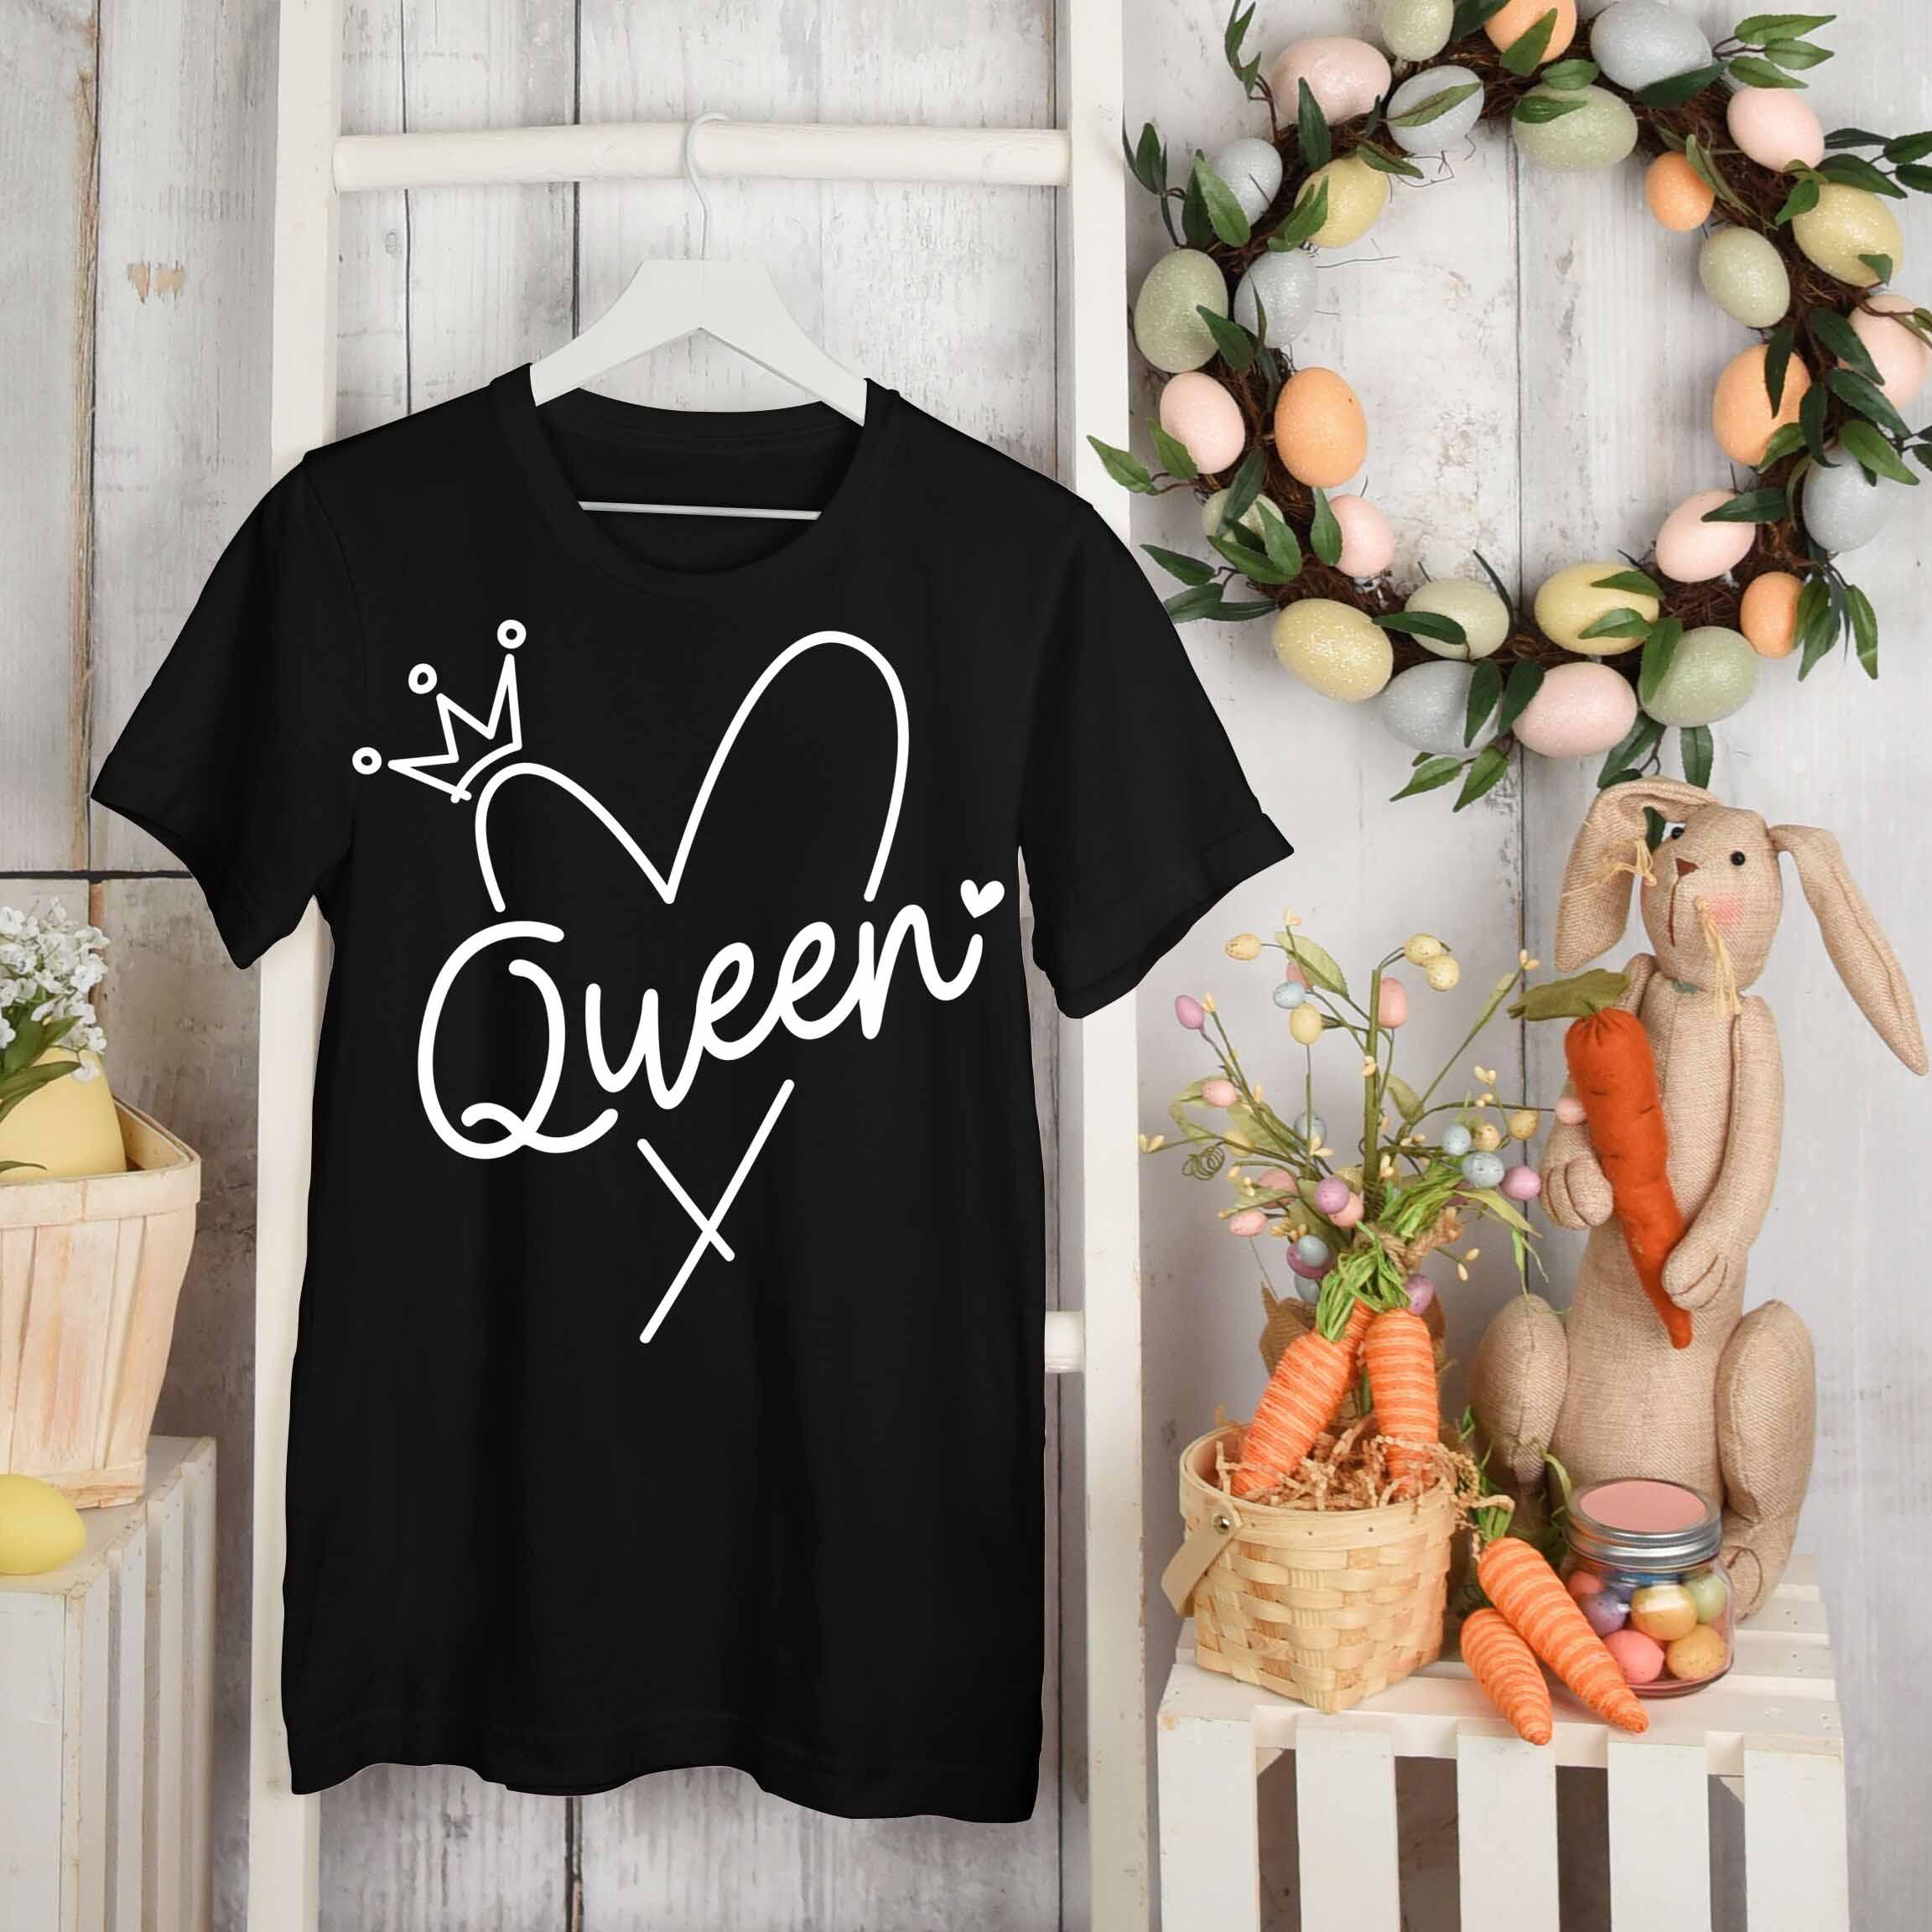 Queen Heart Graphic Tee - VirtuousWares:Global